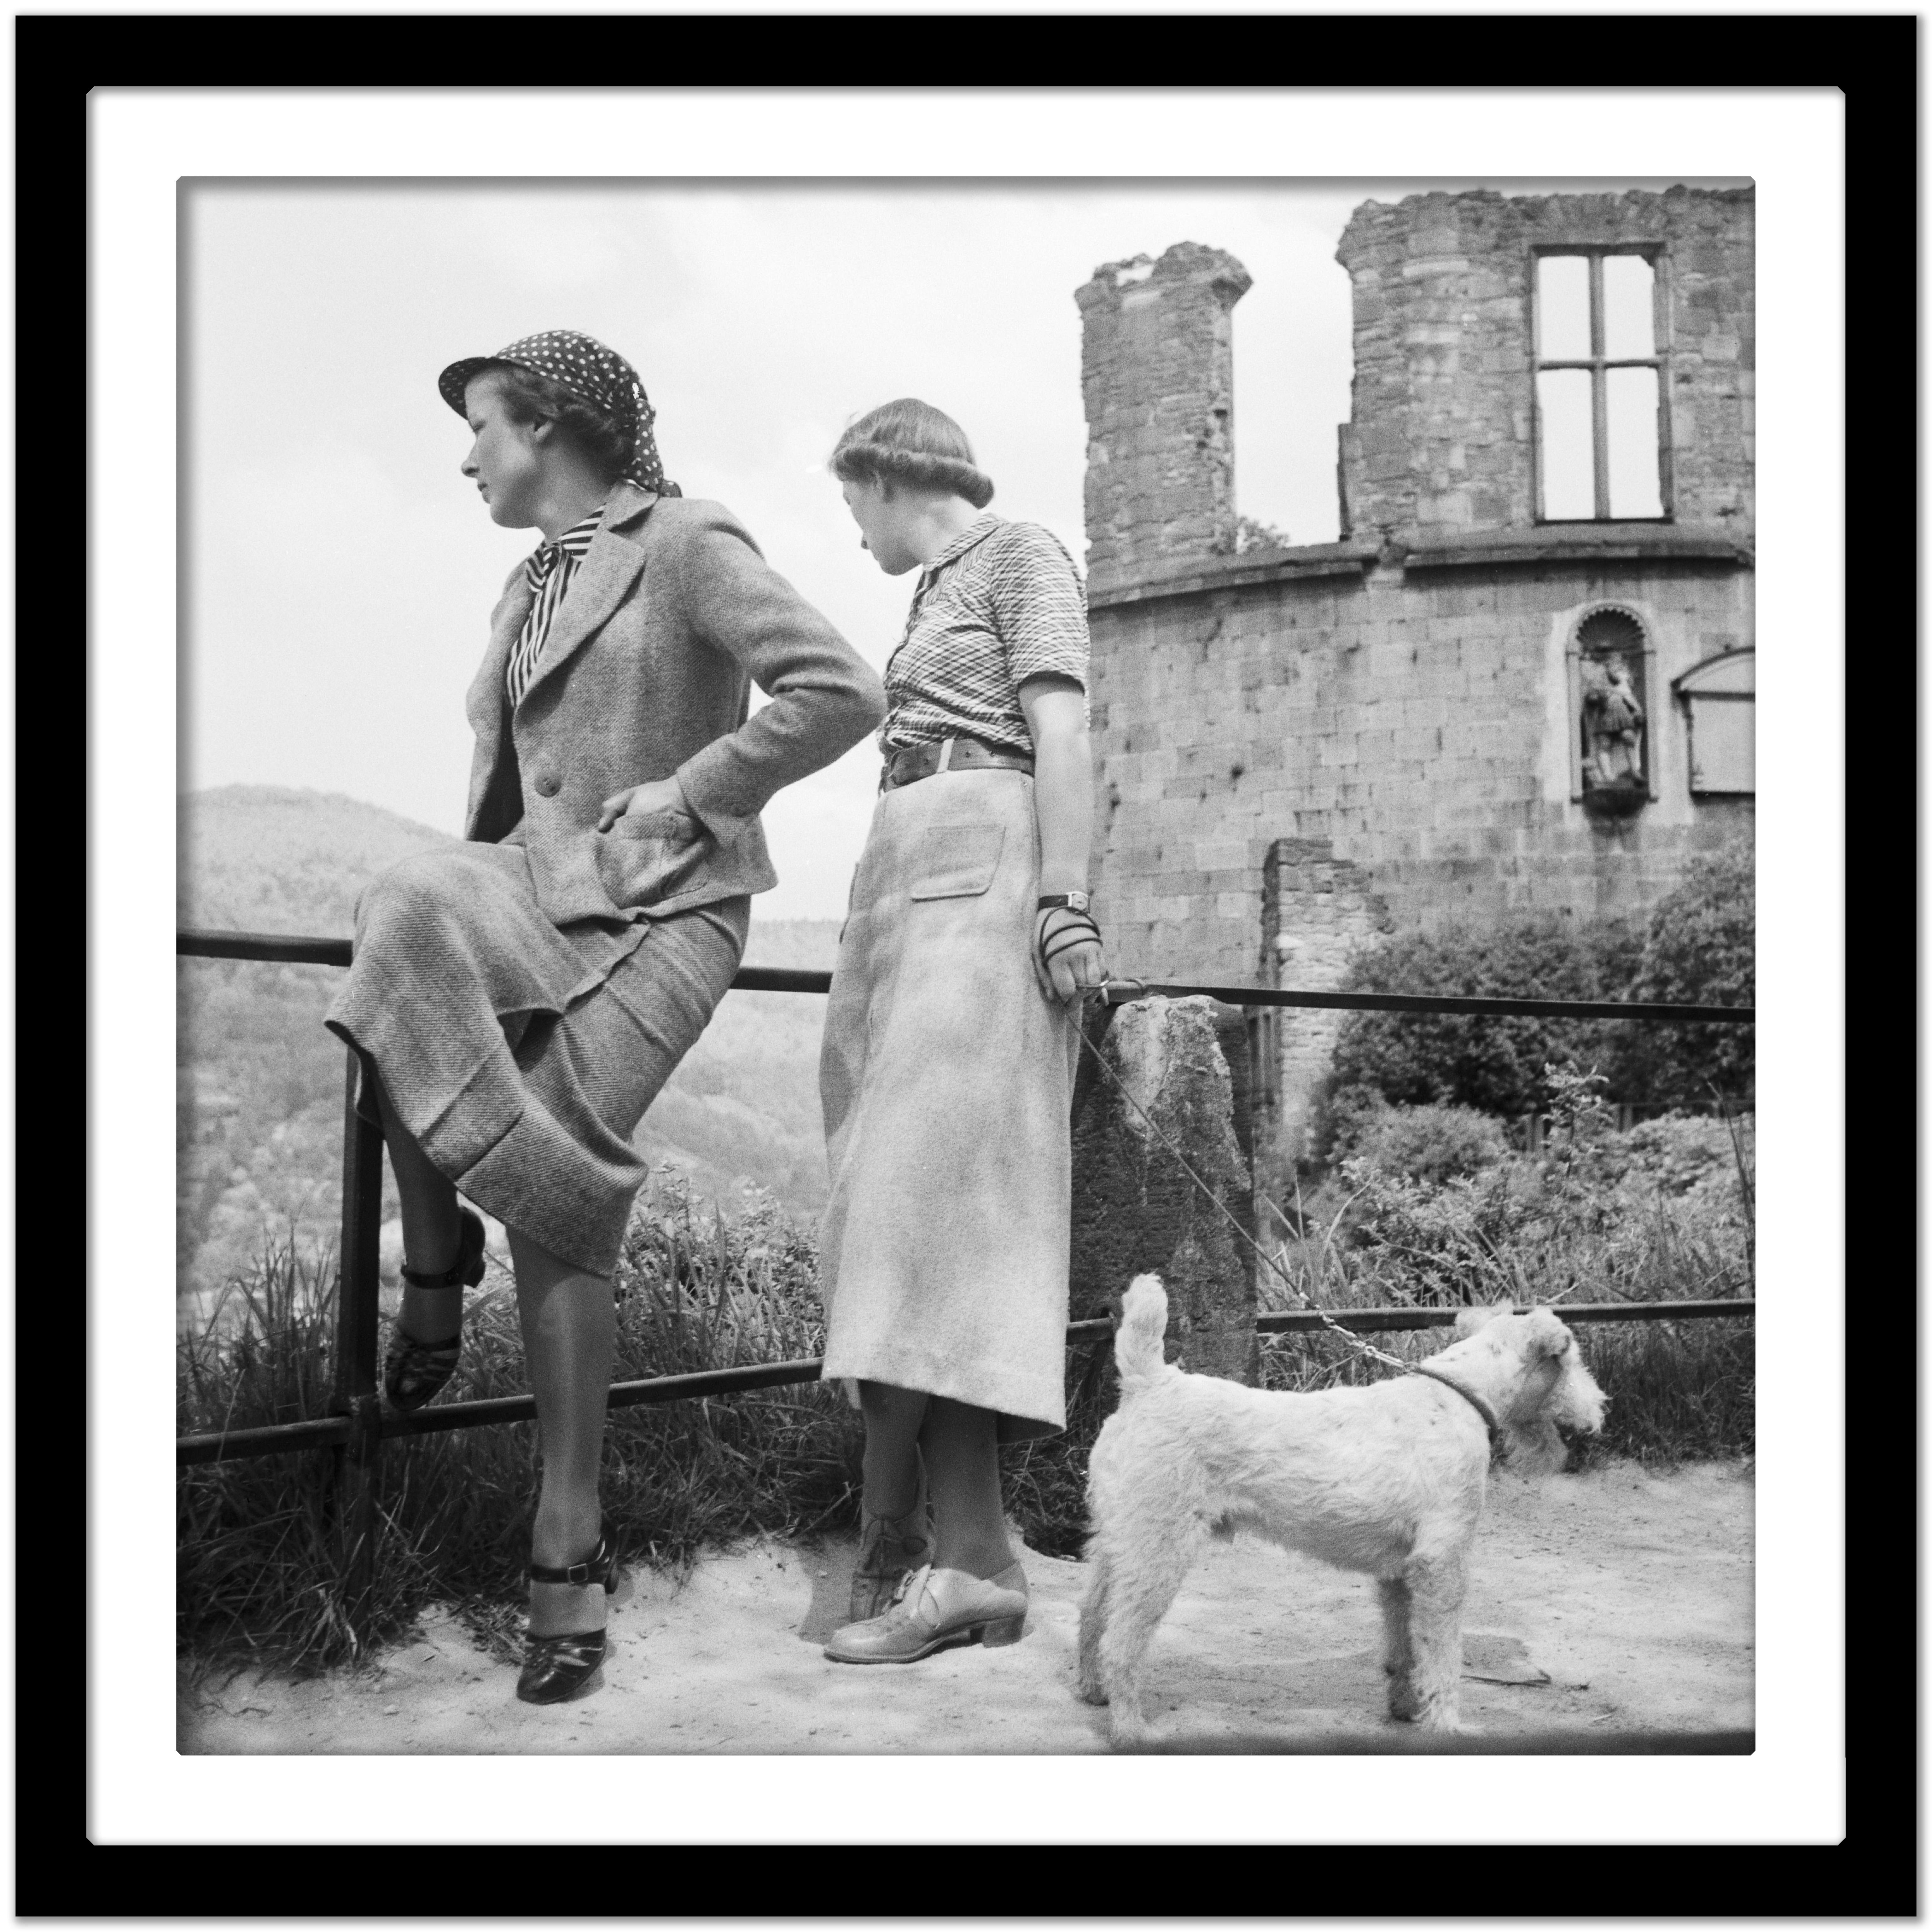 Women, Dog at Heidelberg castle on river neckar, Germany 1936, Printed Later  - Gray Black and White Photograph by Karl Heinrich Lämmel